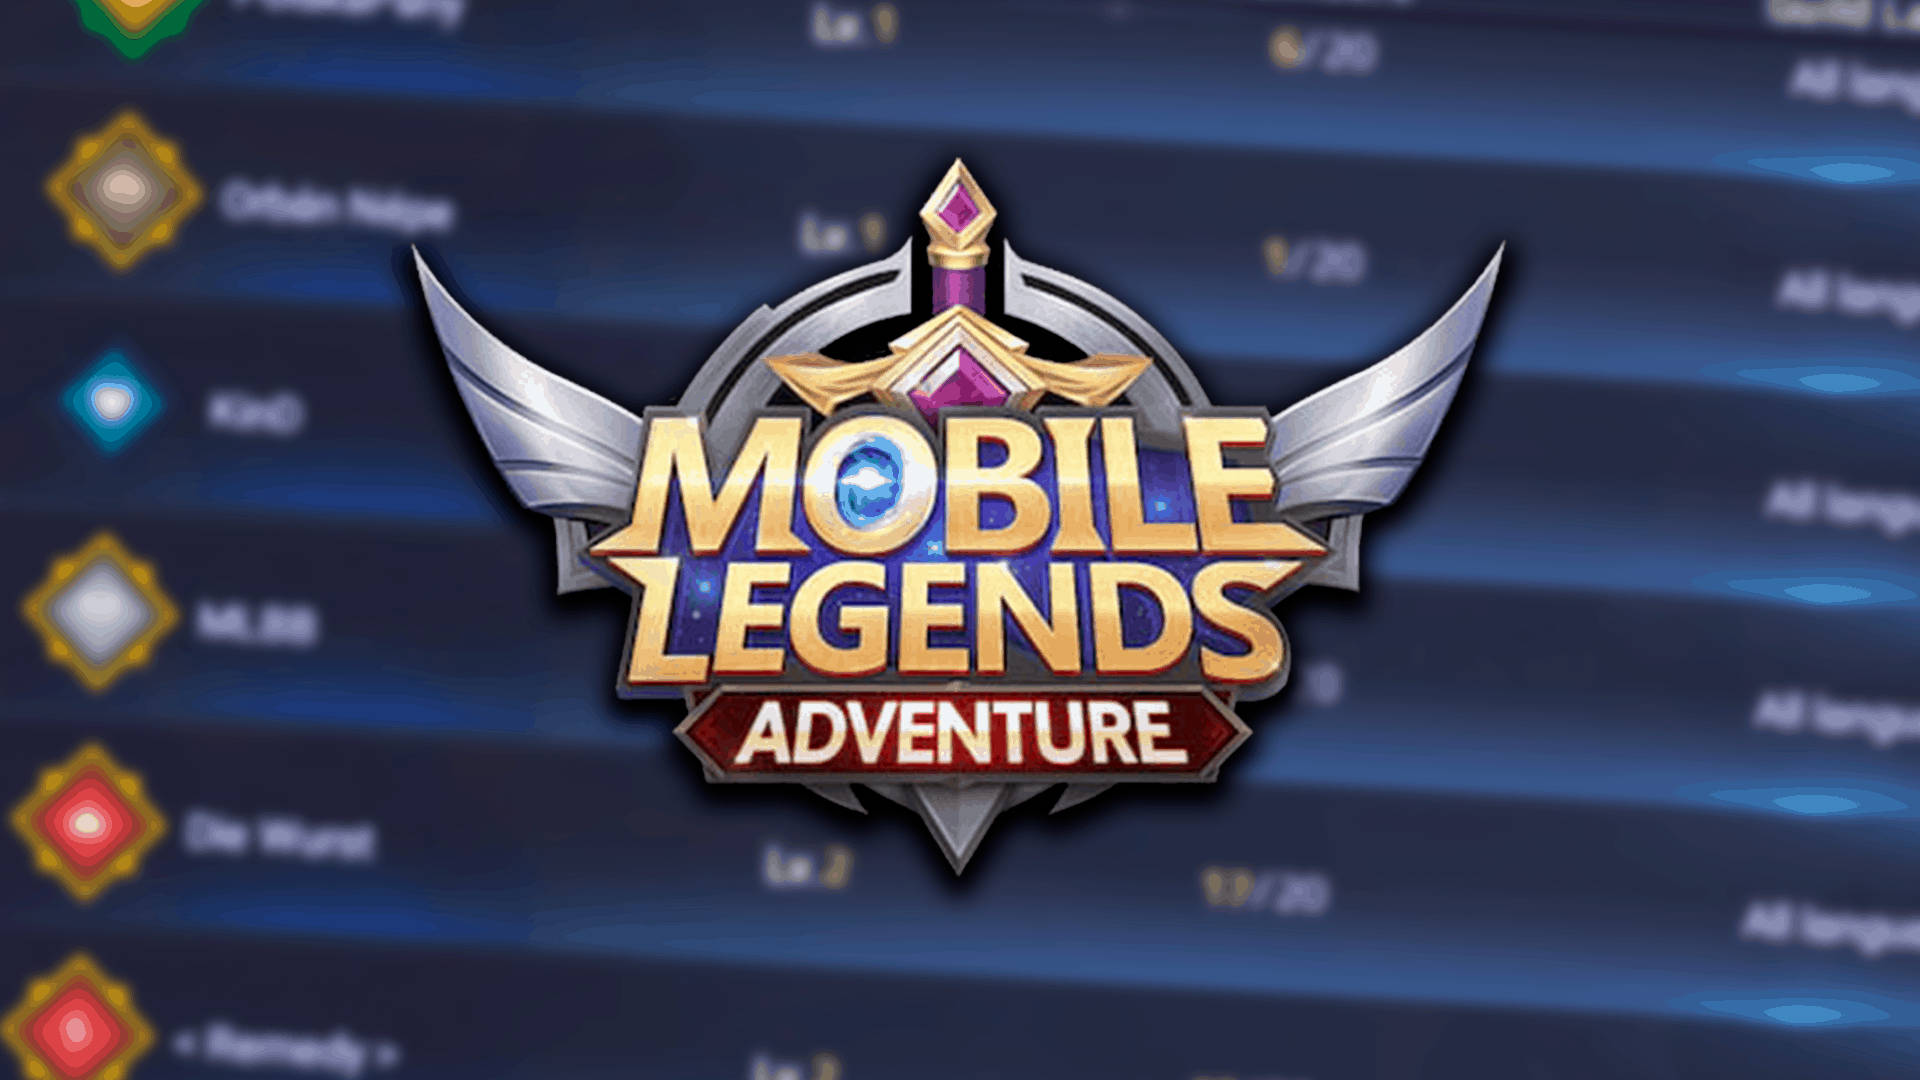 Mobile Legends Adventure Logo Wallpaper